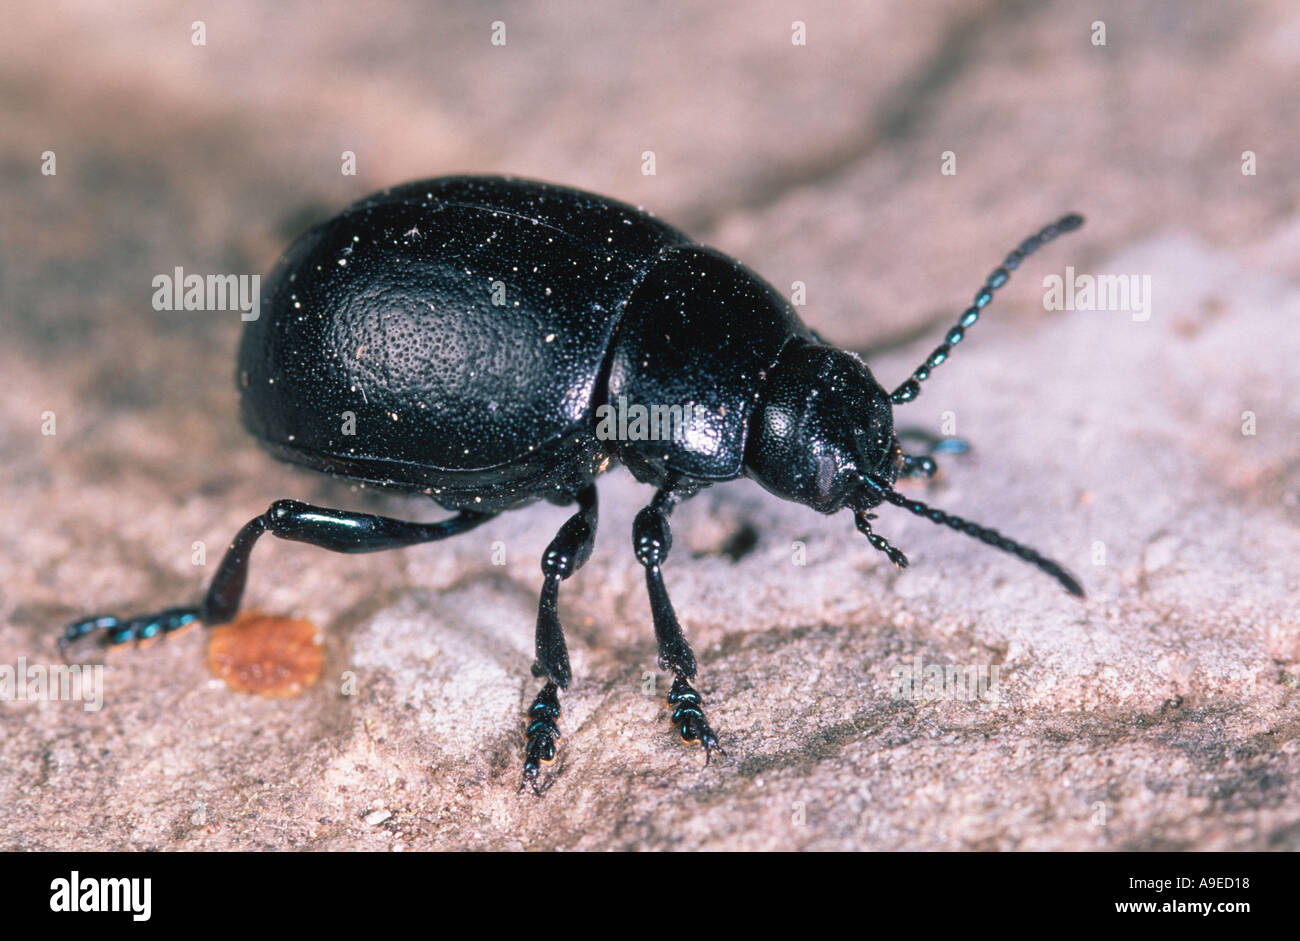 Black coleopteran beetle on ground Spain Stock Photo